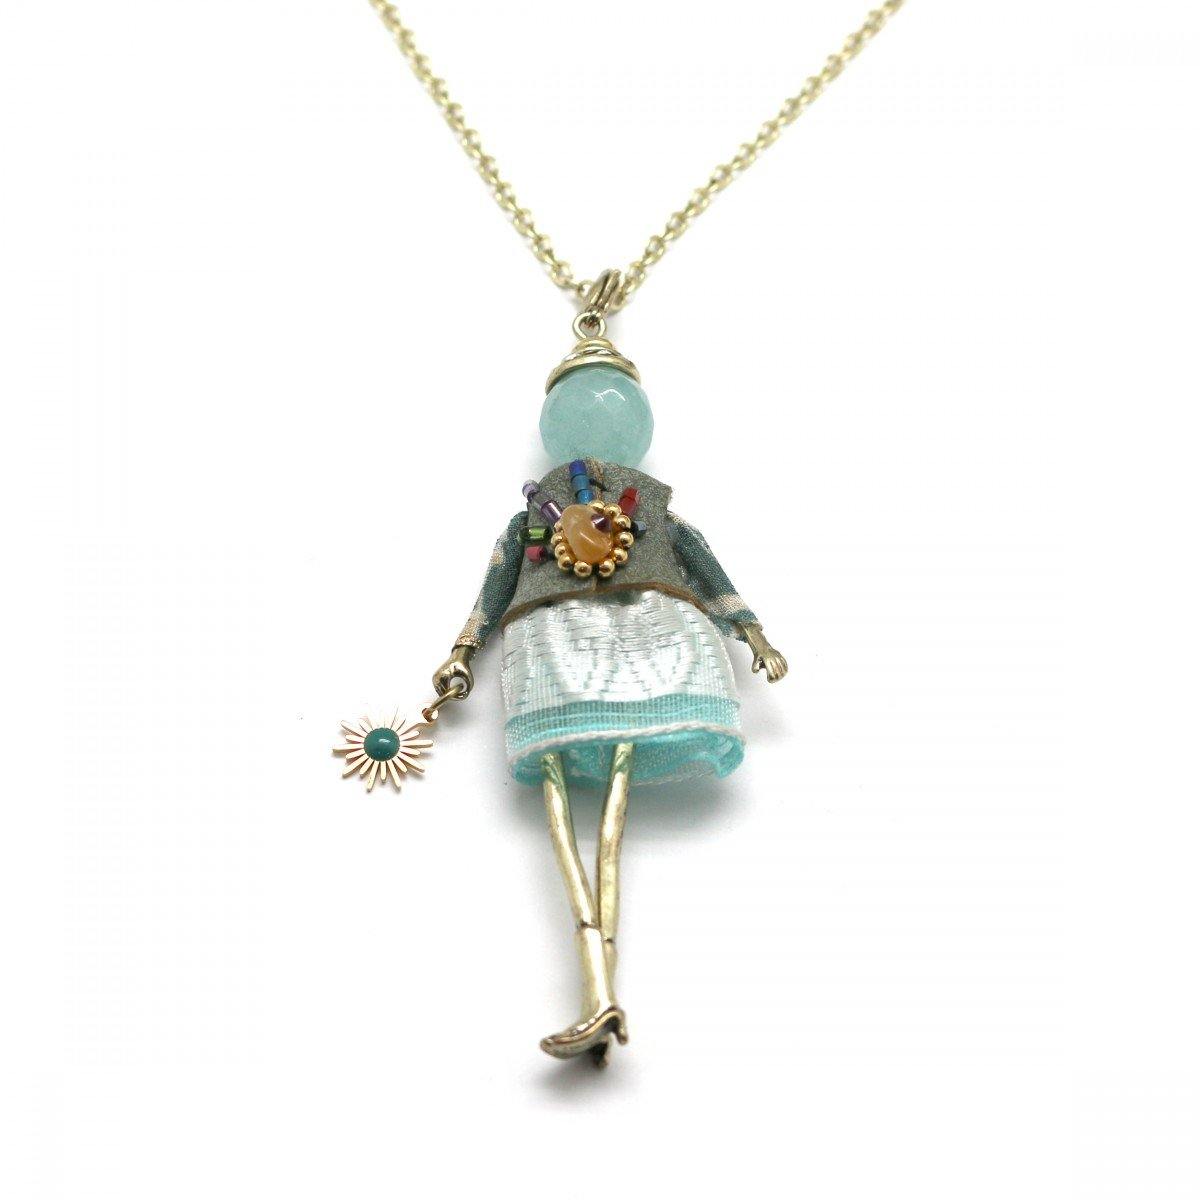 Moon C Small Doll Pendant on a Long Chain, Natural Stone, Fabric, Metal / Light Blue / 3 Inches / Gift Idea - JOYasForYou